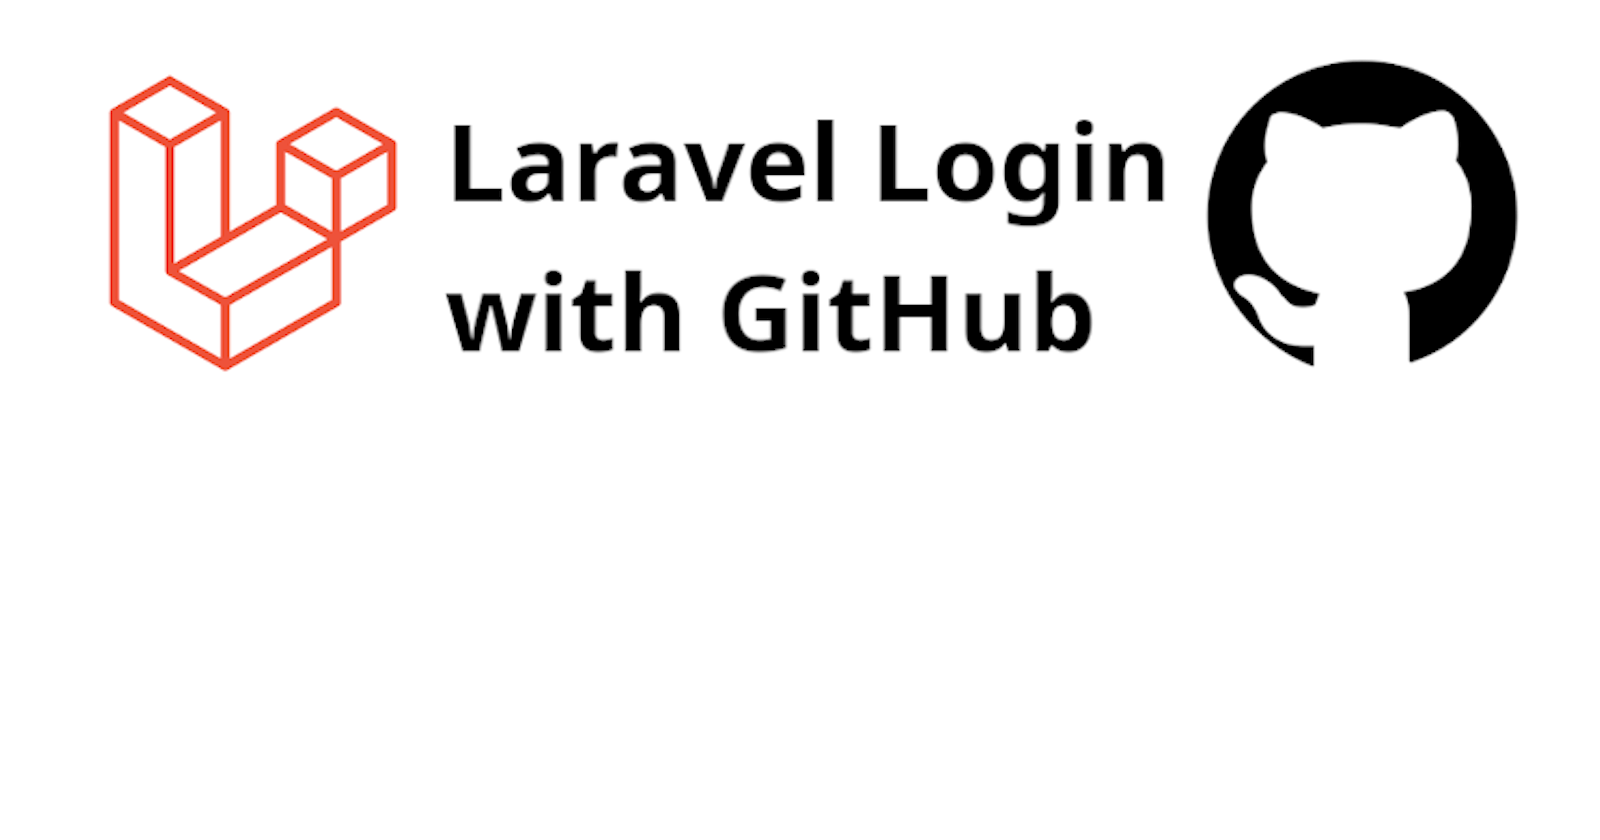 Laravel Login with Github Account.